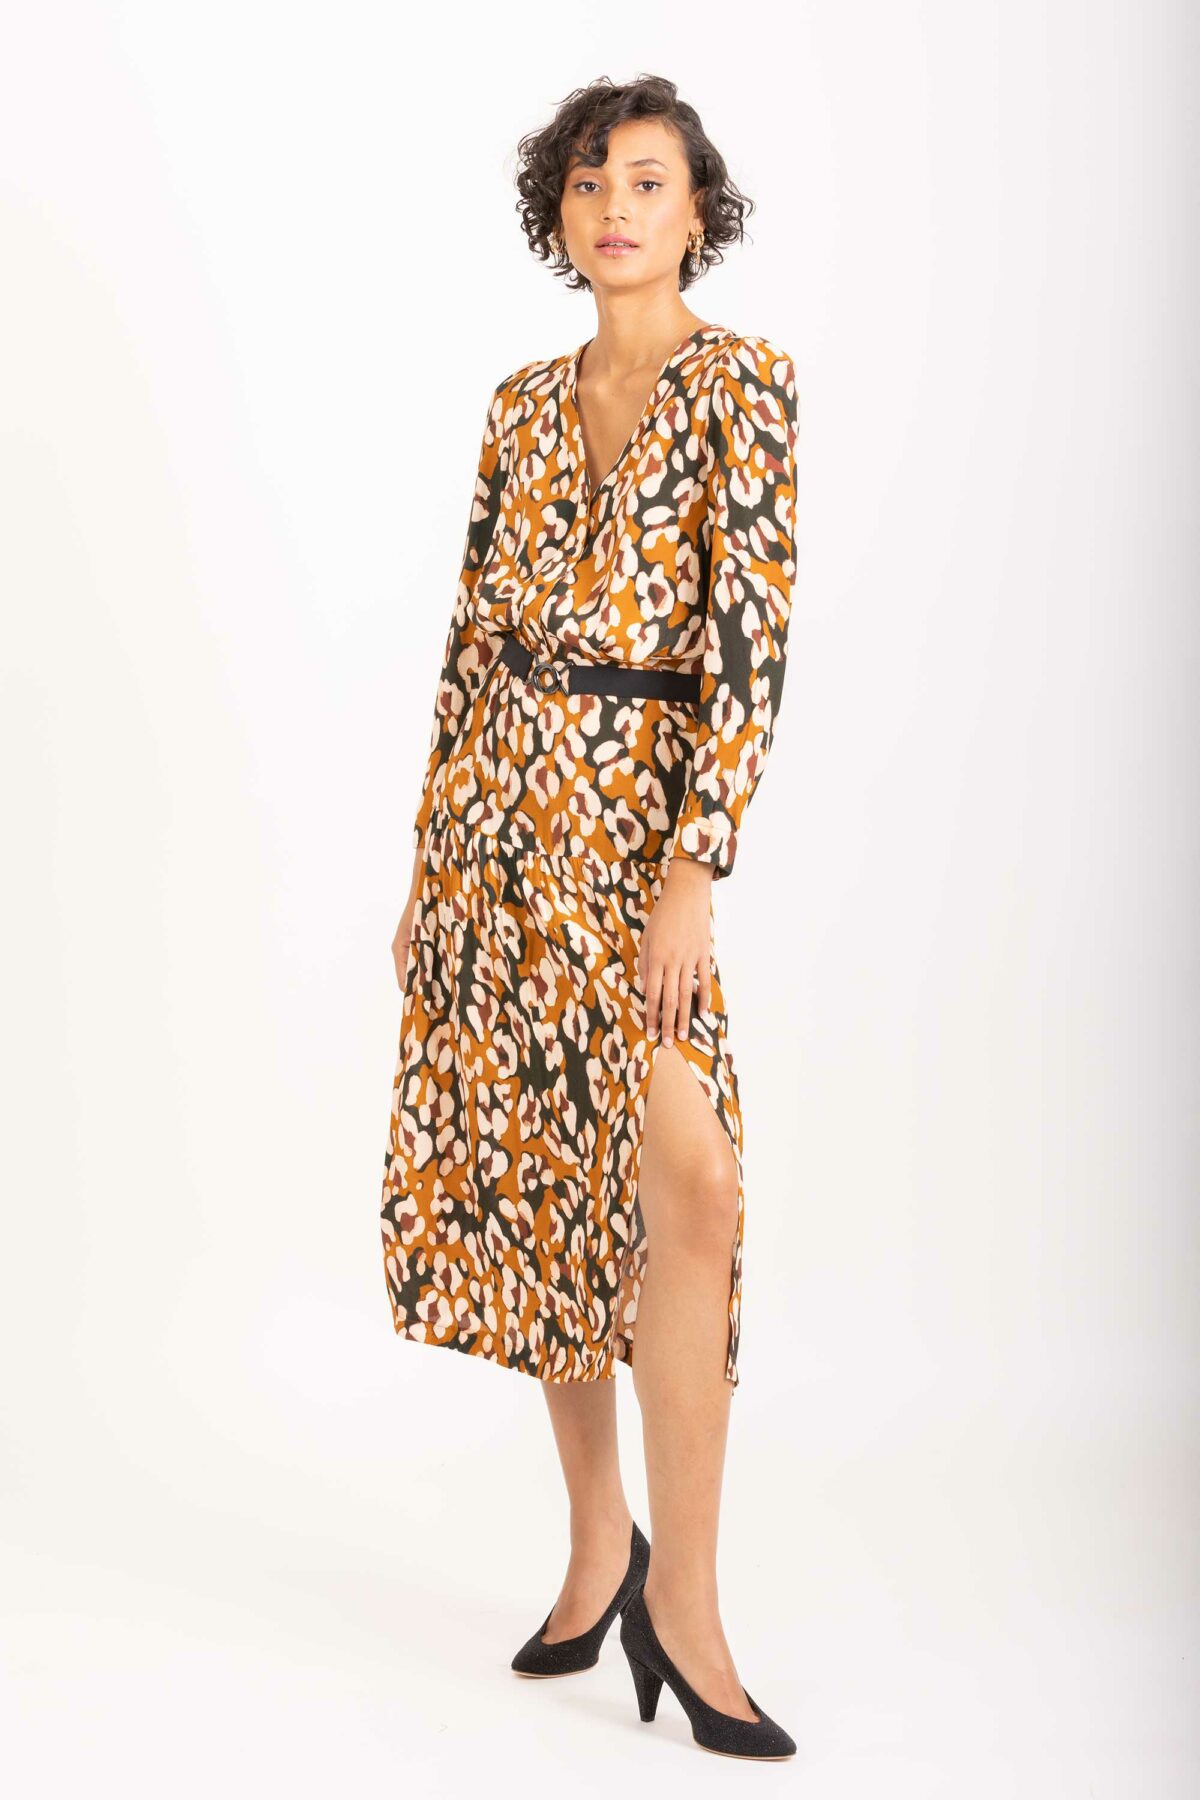 reglisse-leopard-dress-midi-side-slit-viscose-belt-lapetitefrancaise-matchboxthens